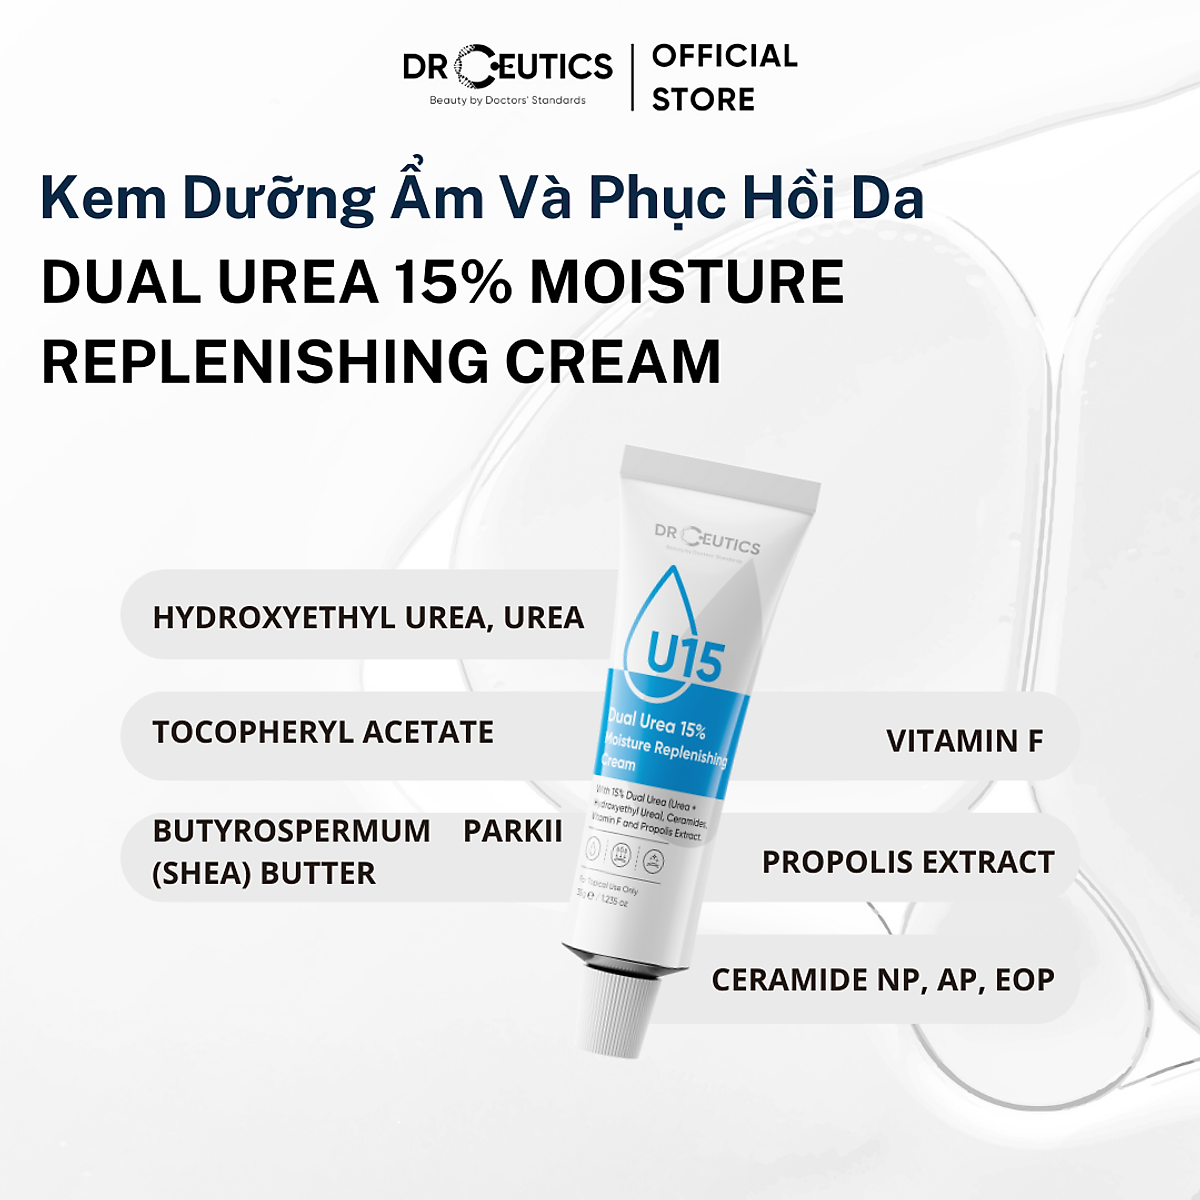 DRCEUTICS Kem Dưỡng Ẩm Và Phục Hồi Da Dual Urea 15% Moisture Replenishing Cream (35g)